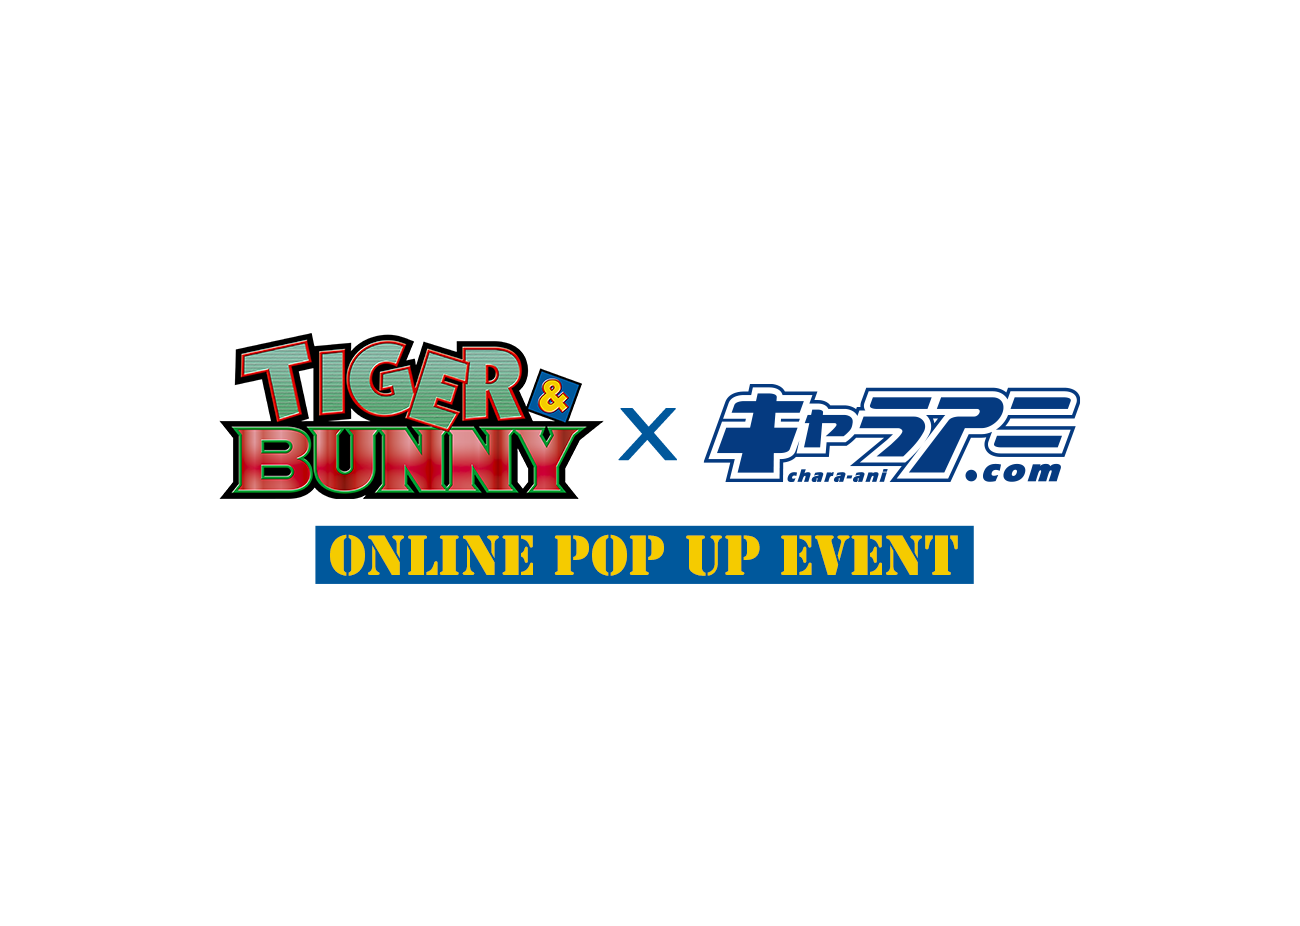 TIGER & BUNNY ONLINE POP UP EVENT